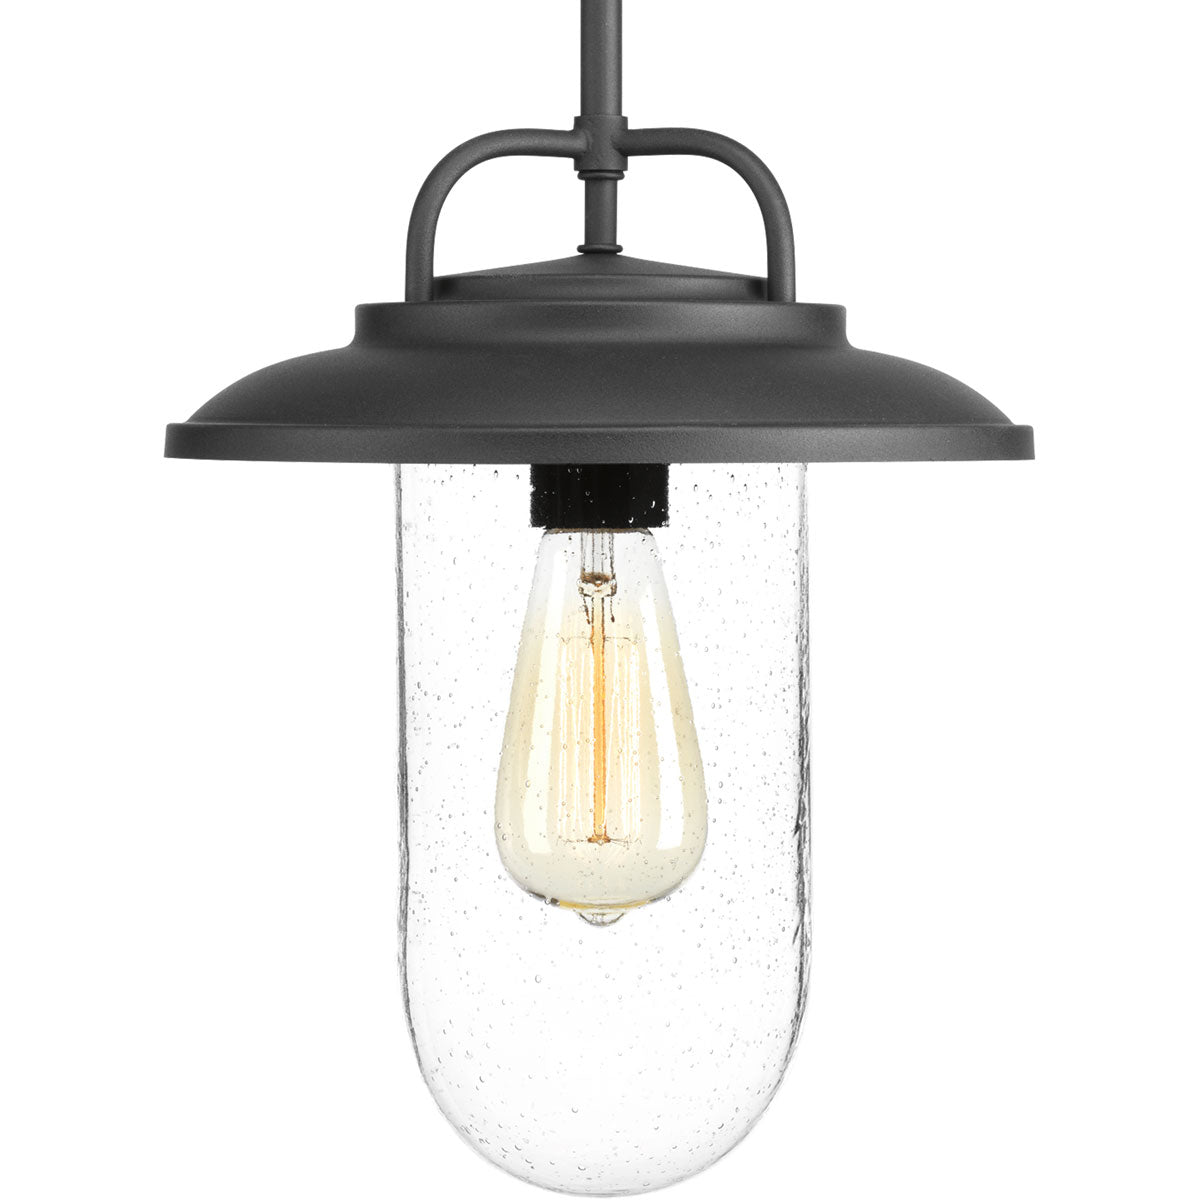 Progress Canada - One Light Hanging Lantern - Beaufort - Black- Union Lighting Luminaires Decor